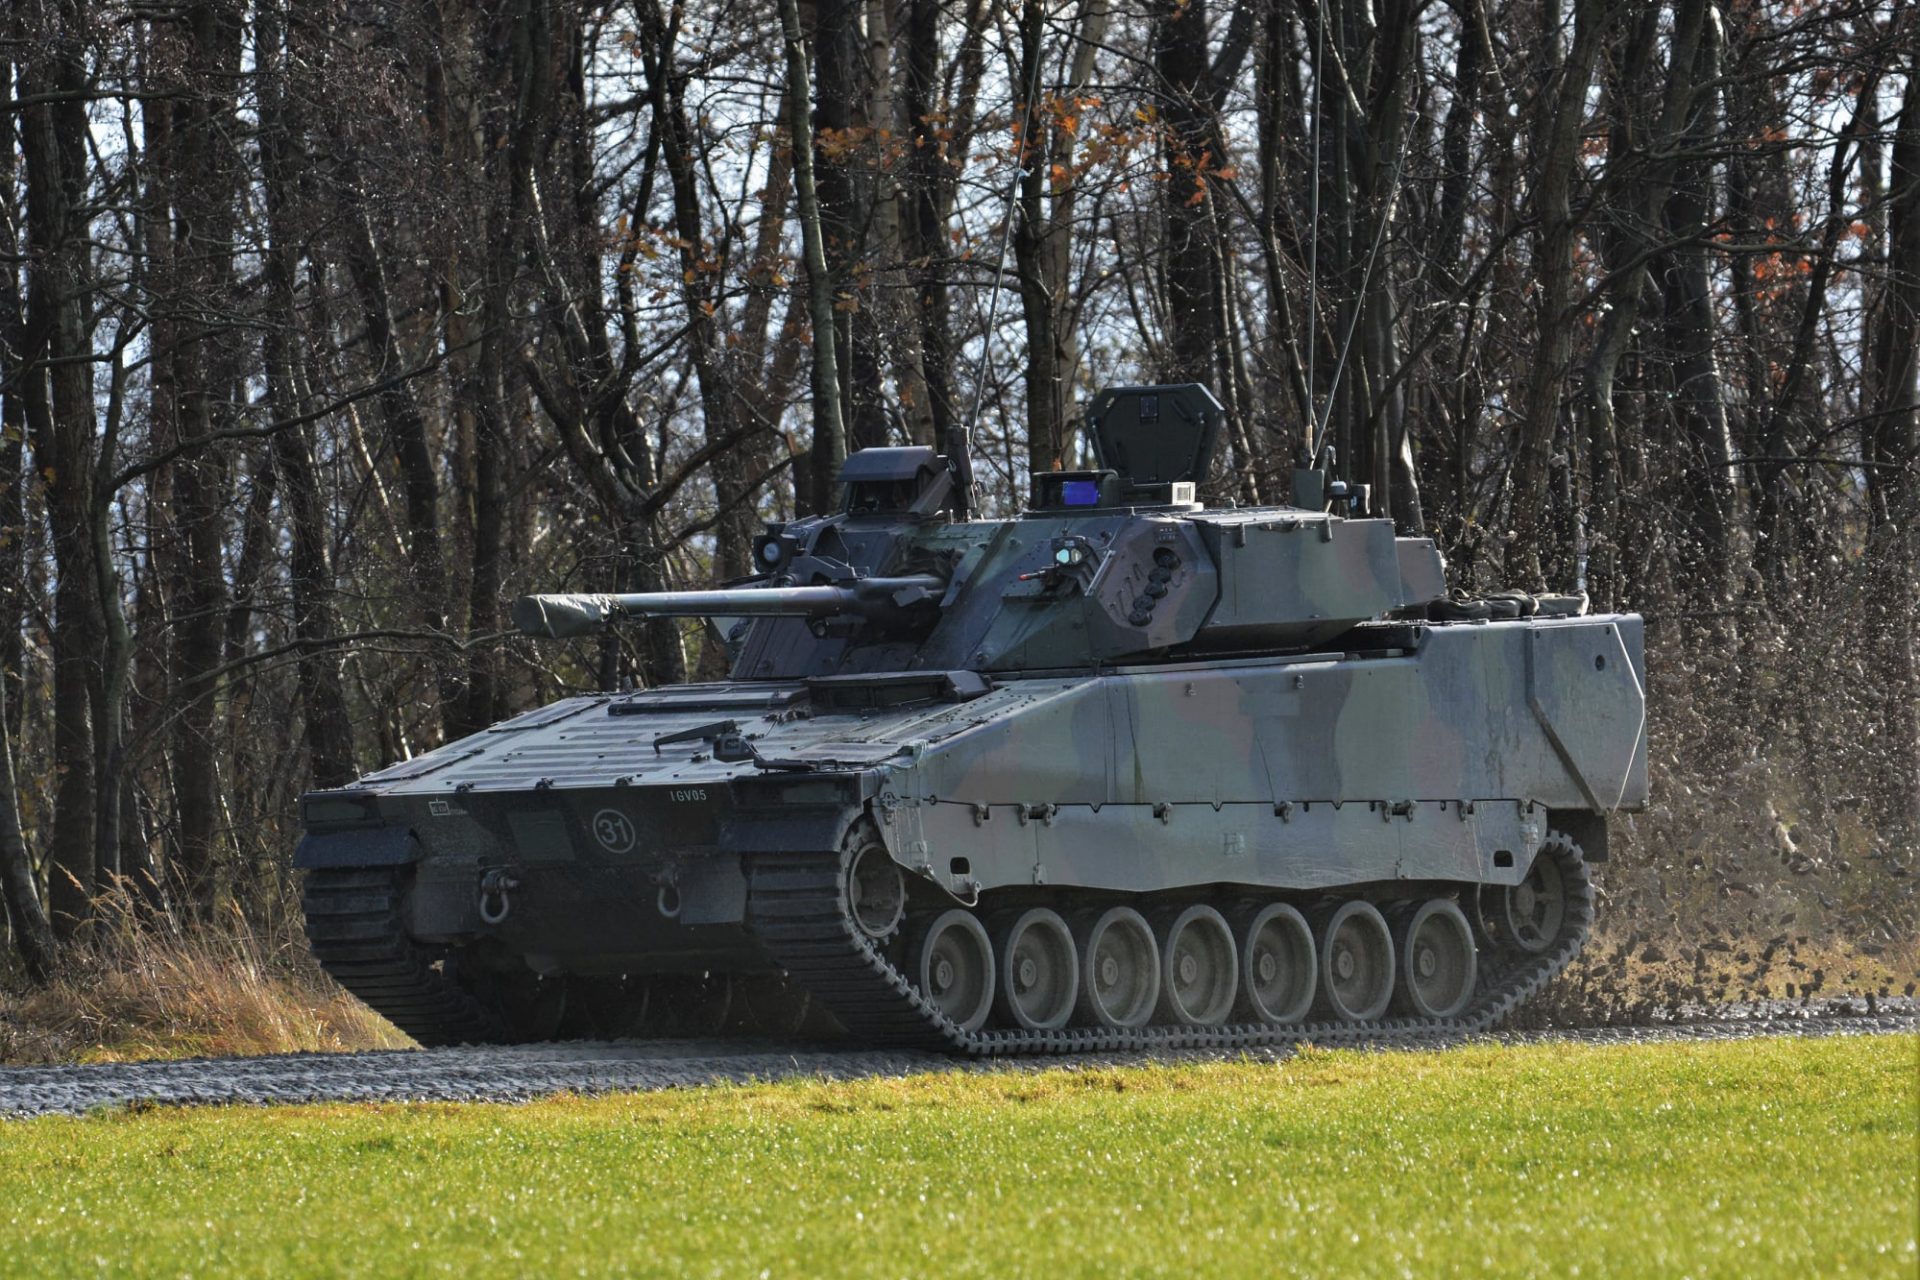 Bester Schützenpanzer: Ukraine erhält neue Hightech-Waffe